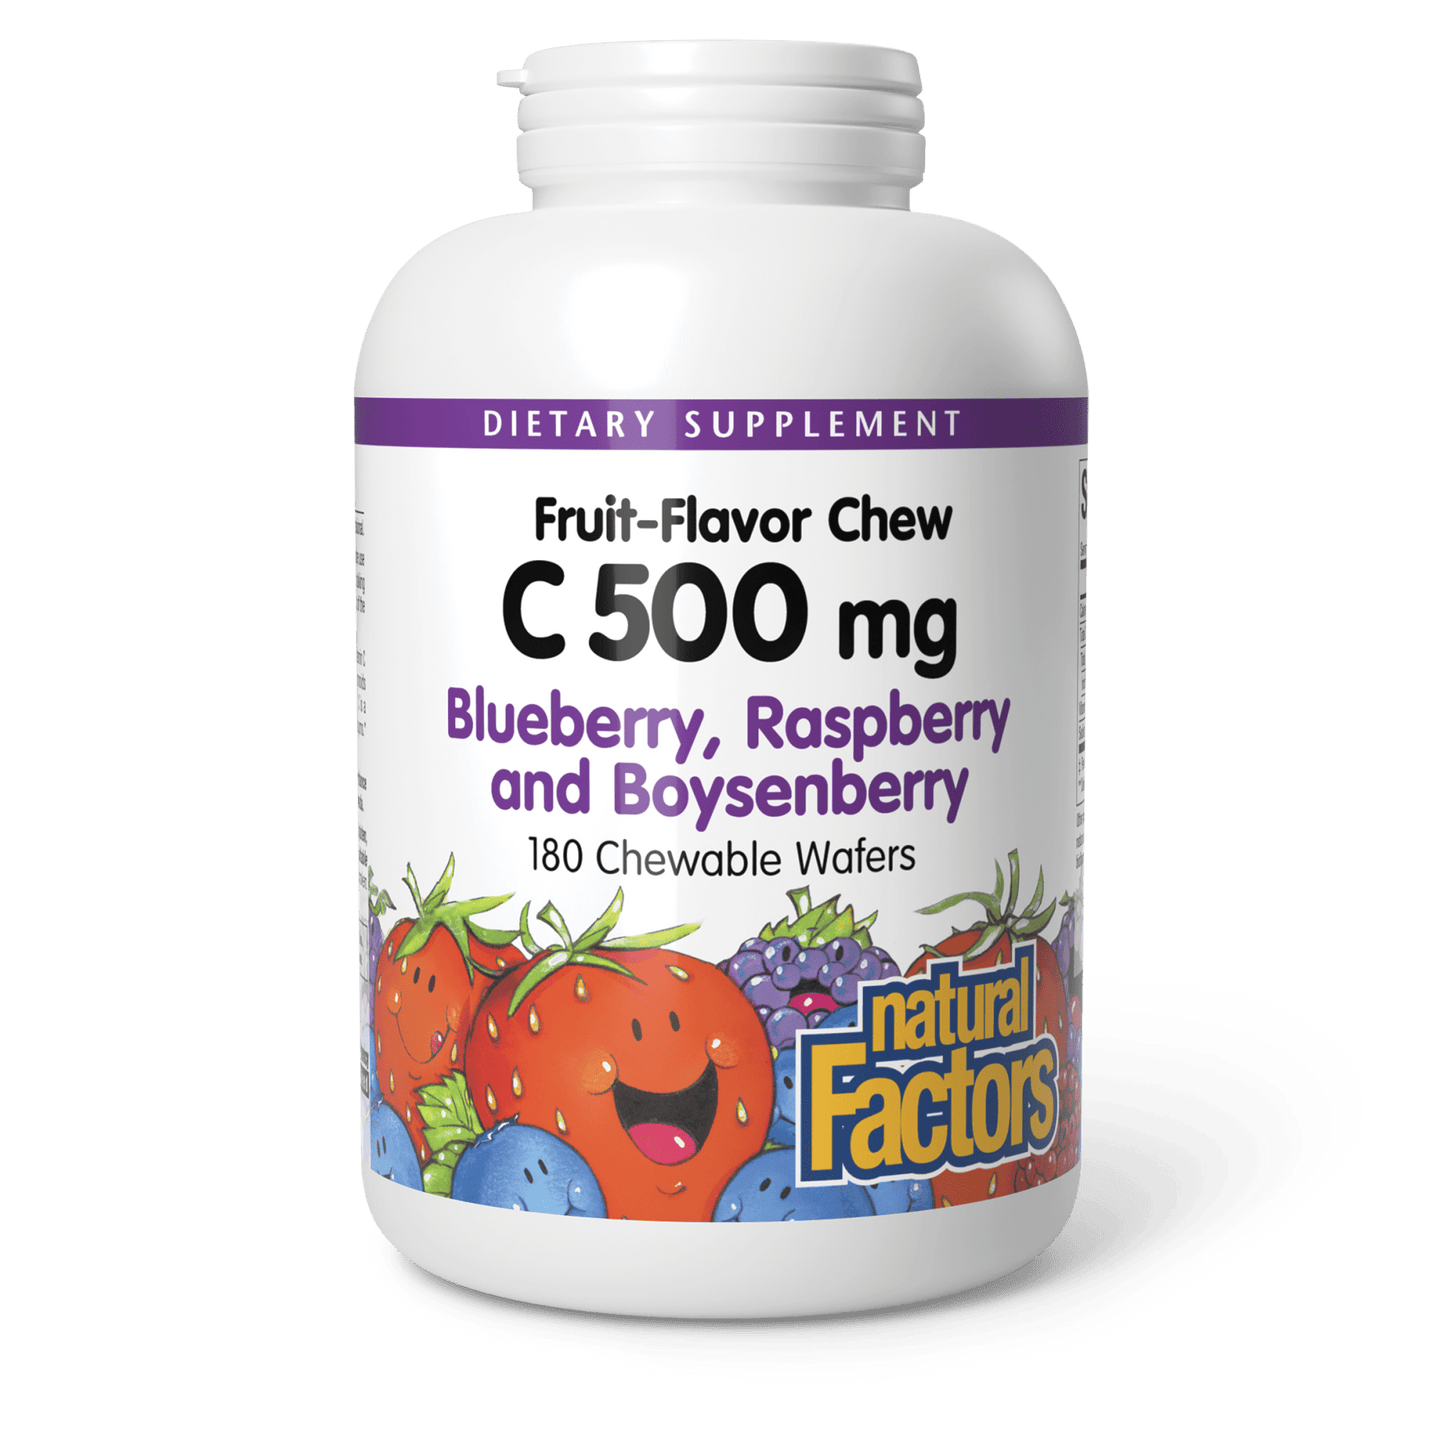 Vitamin C Fruit-Flavor Chew|variant|hi-res|1327U